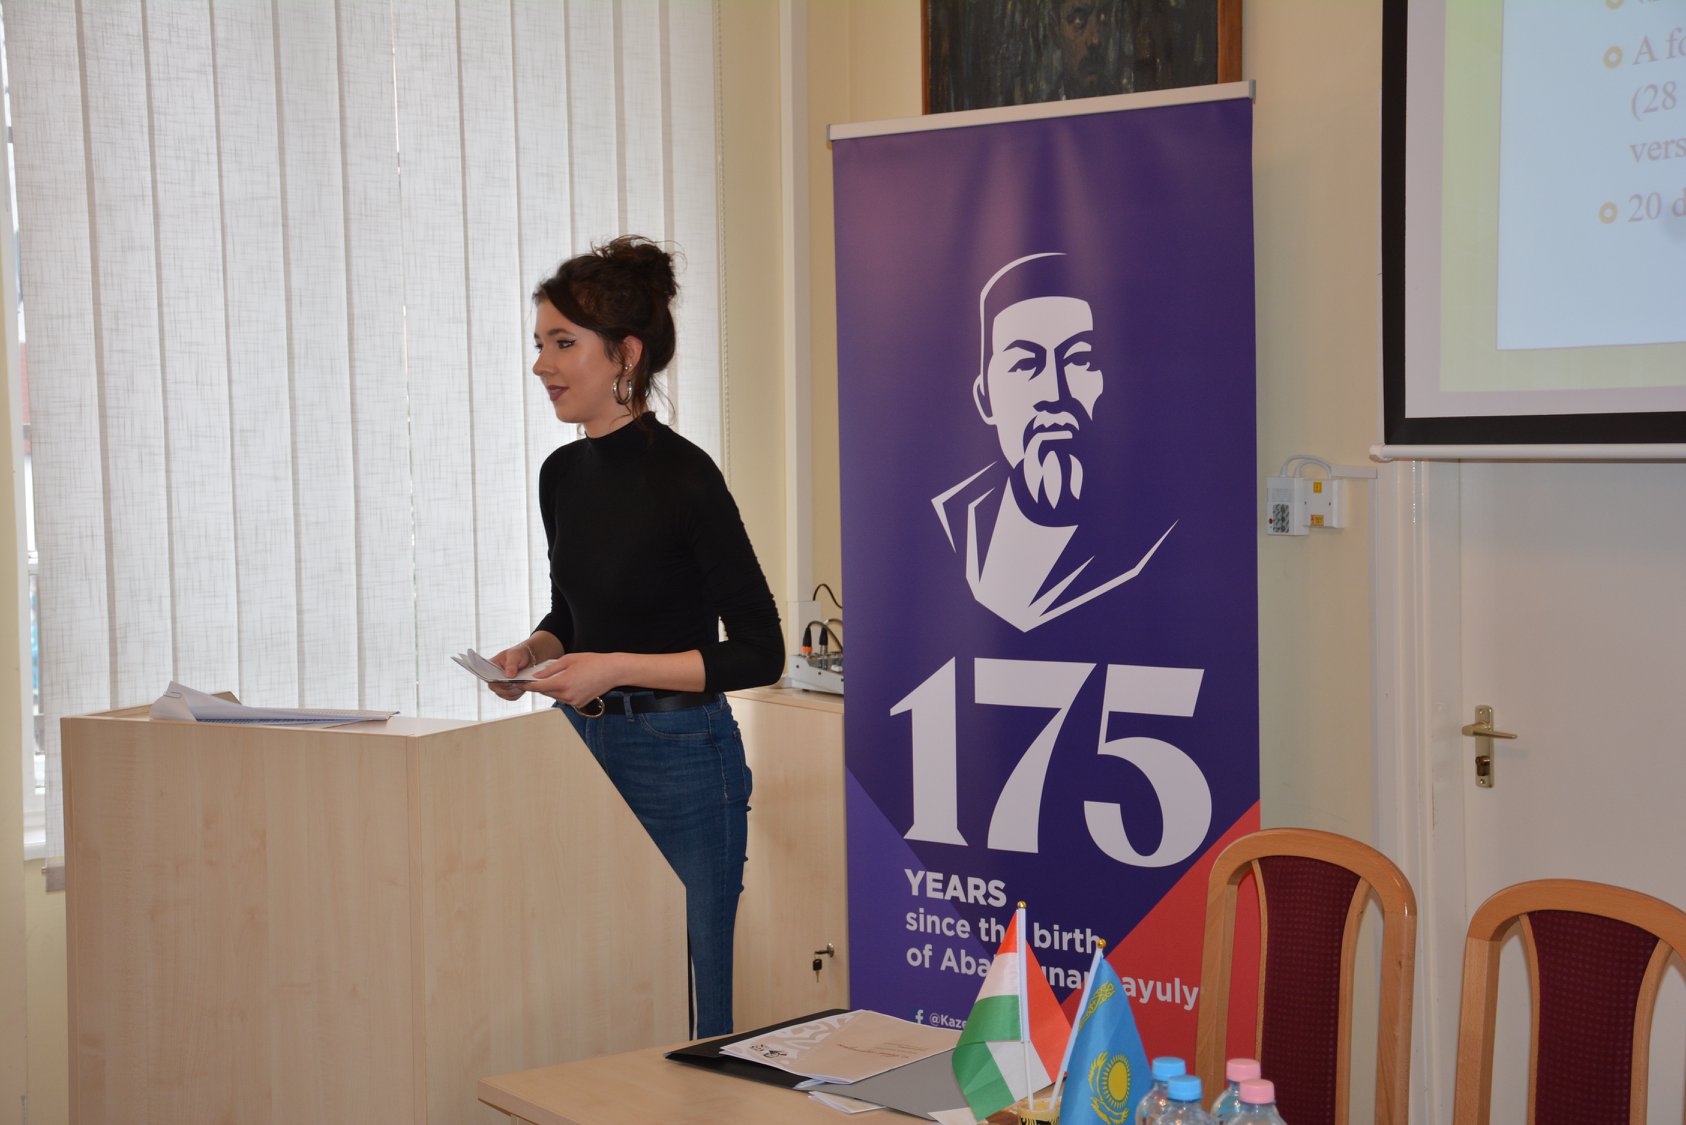 Abai readings held at the Hungarian University of Szeged